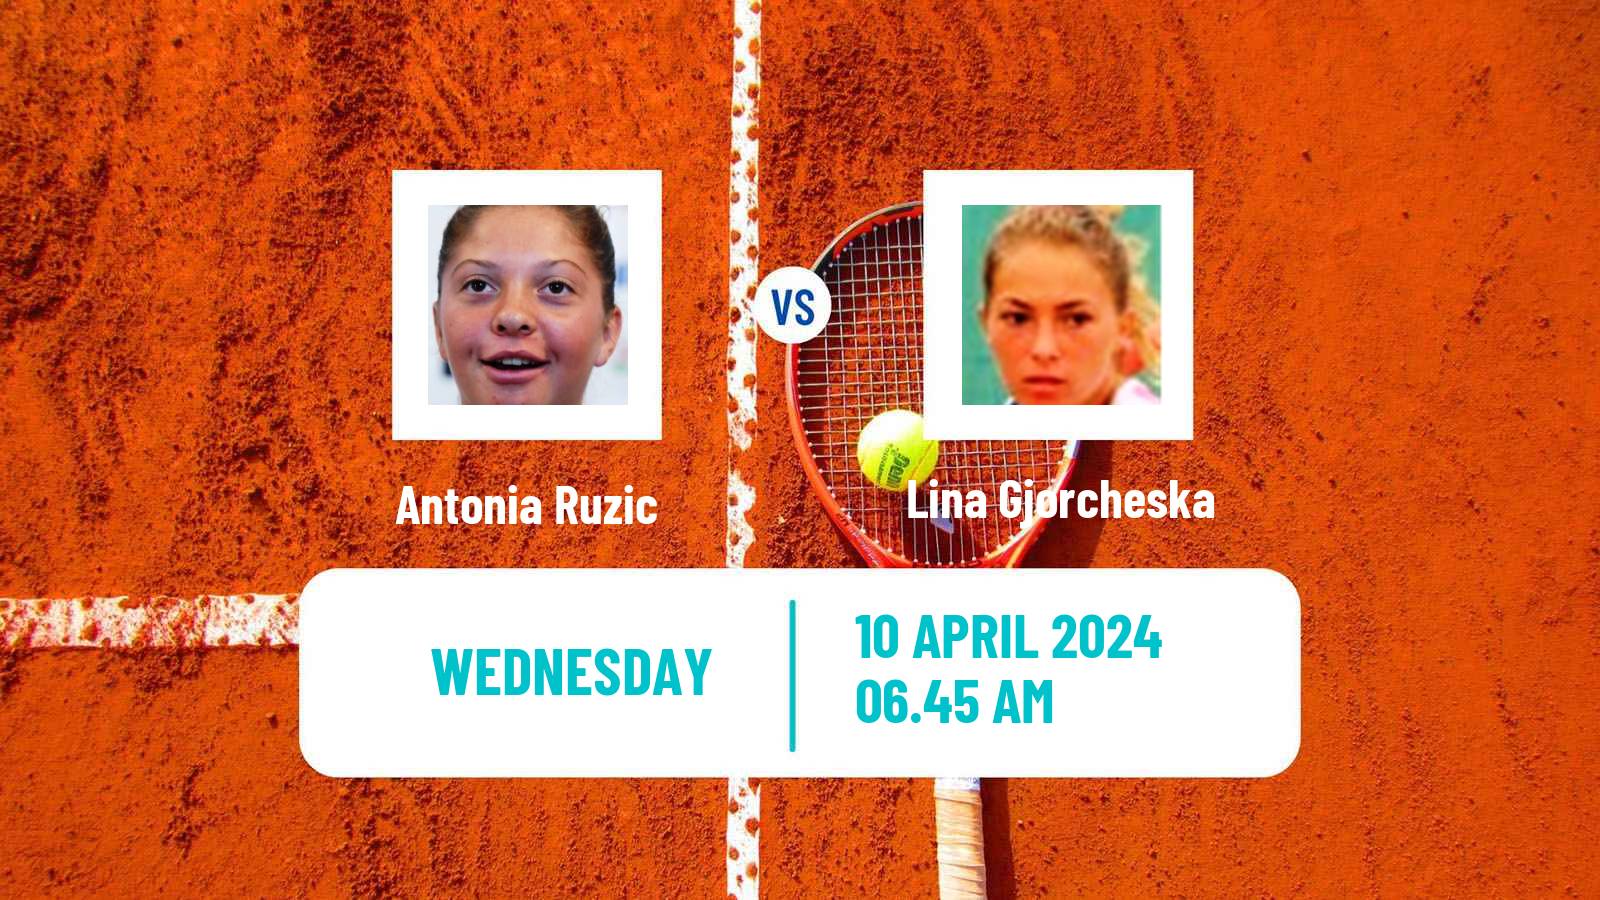 Tennis WTA Billie Jean King Cup Group II Antonia Ruzic - Lina Gjorcheska